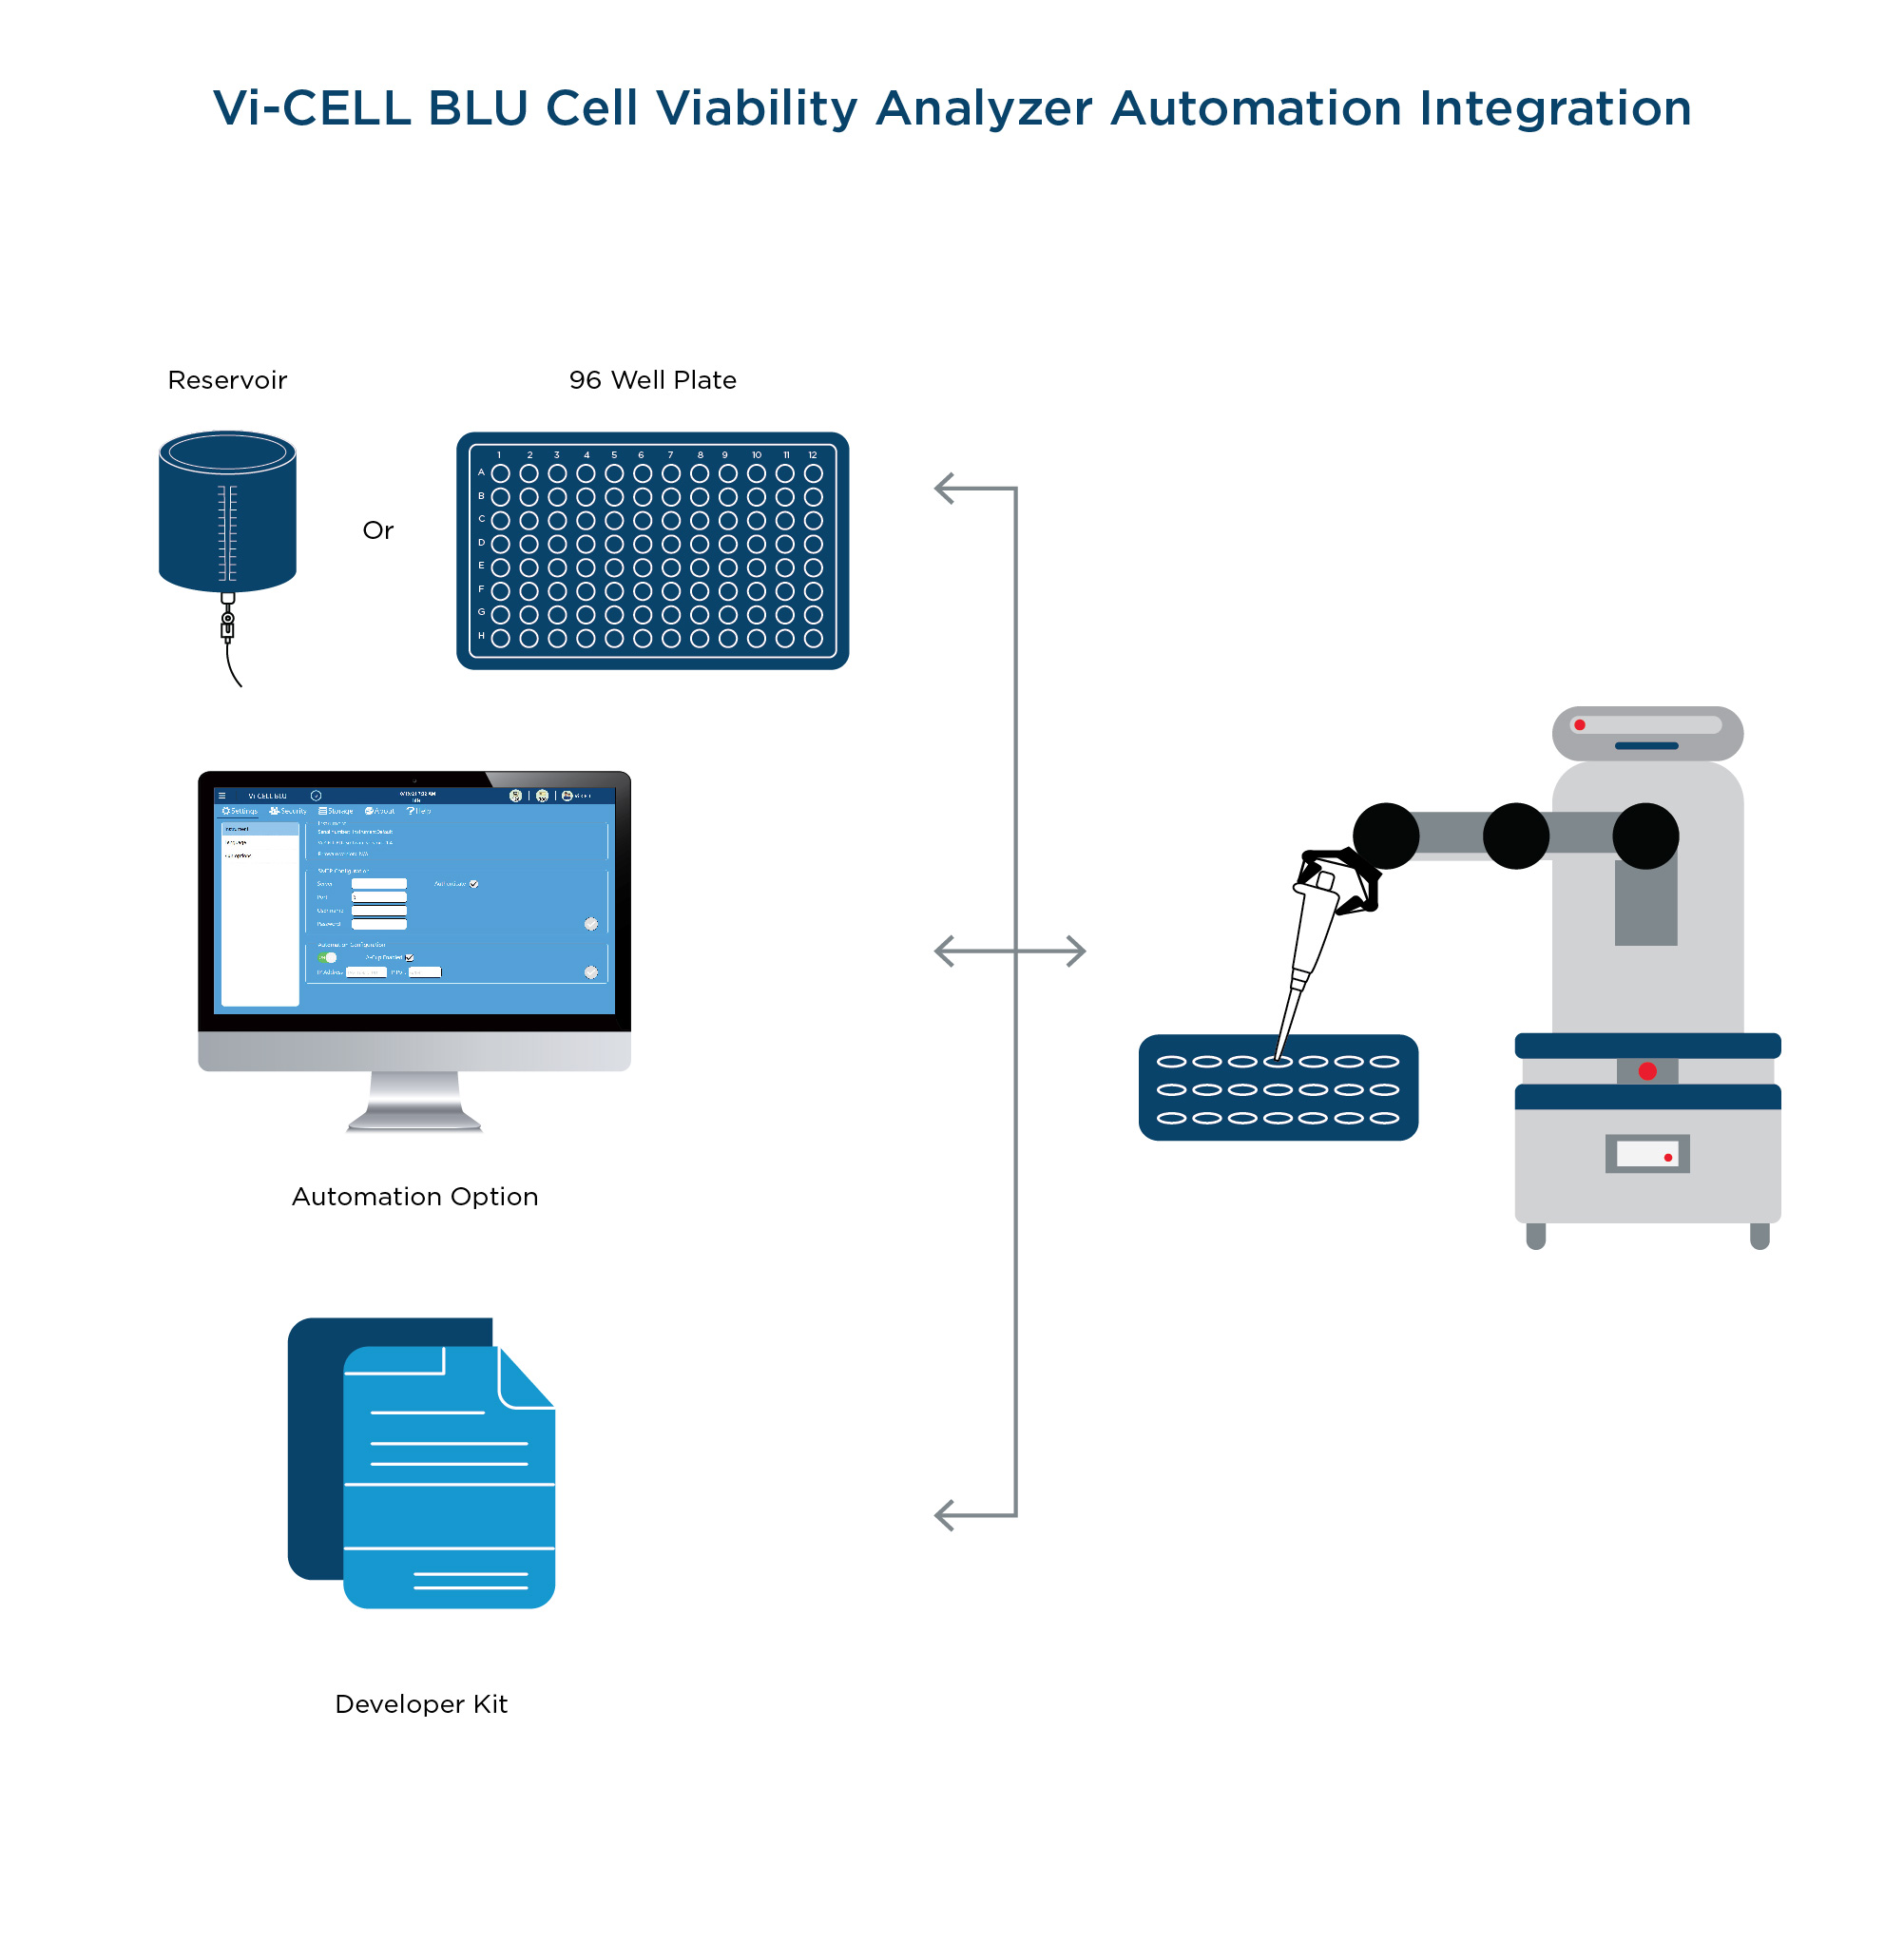 vi-cell blu analyzer automation